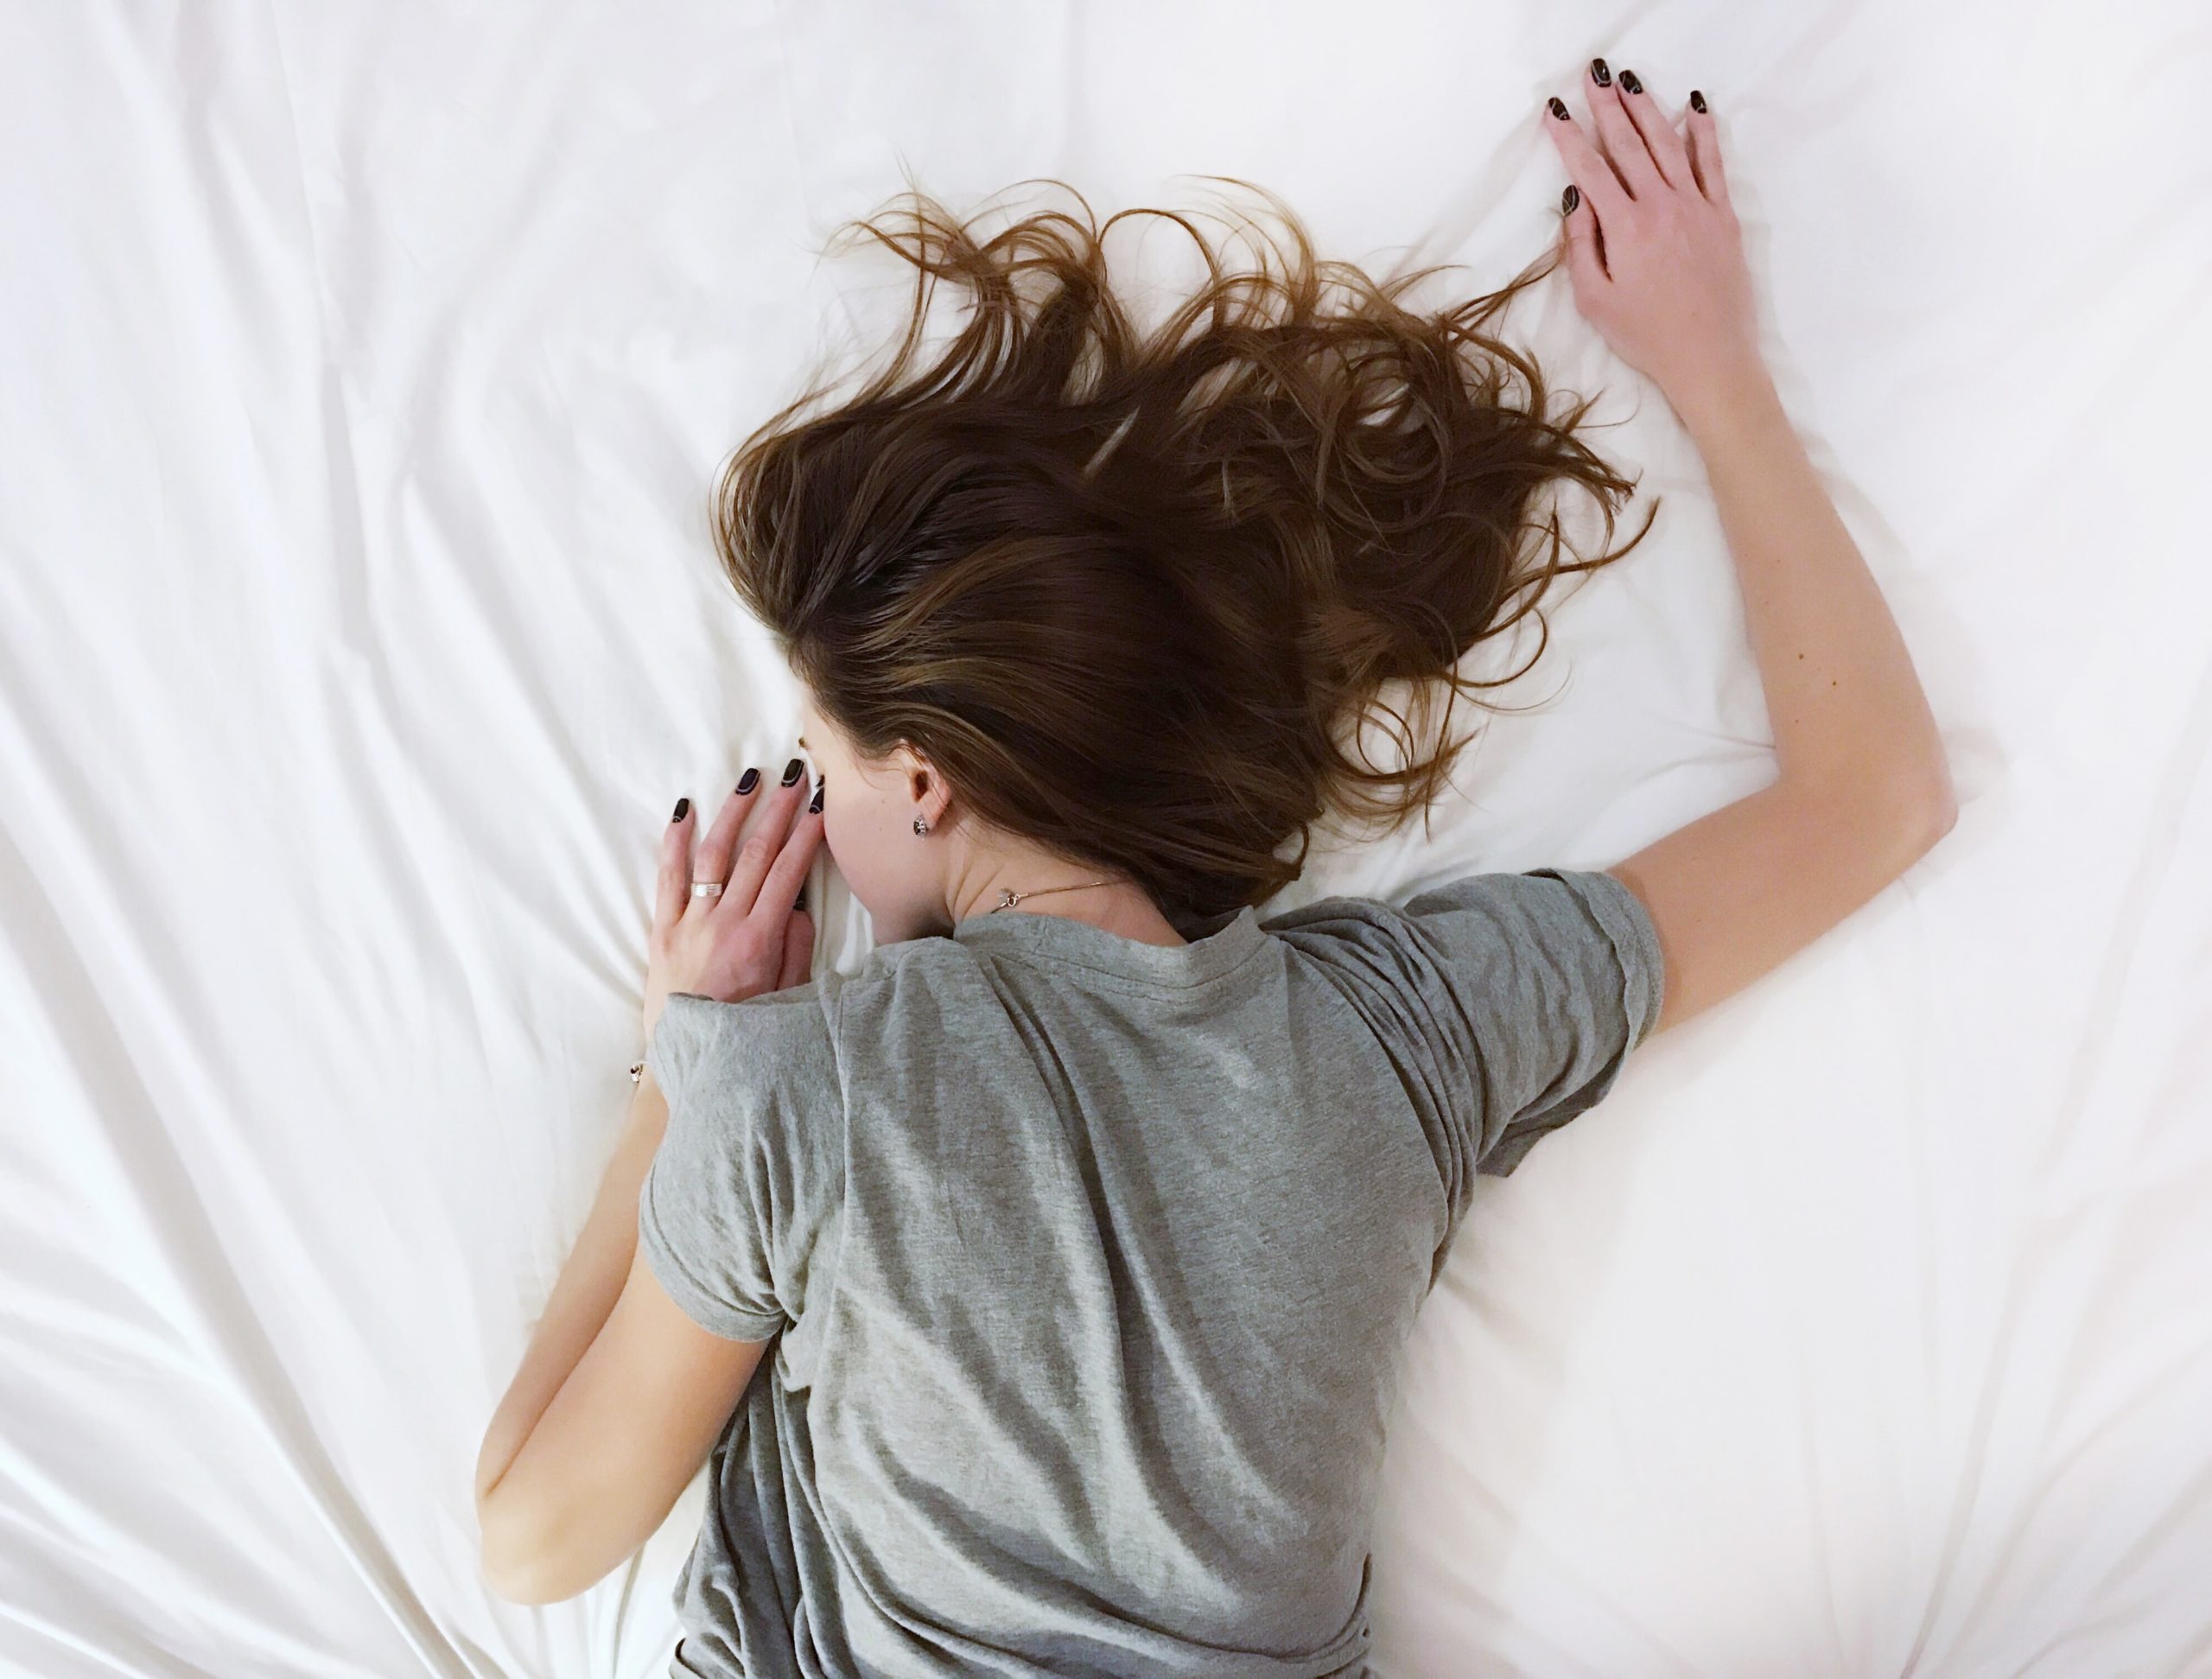 Managing Sleep Issues in Midlife Women